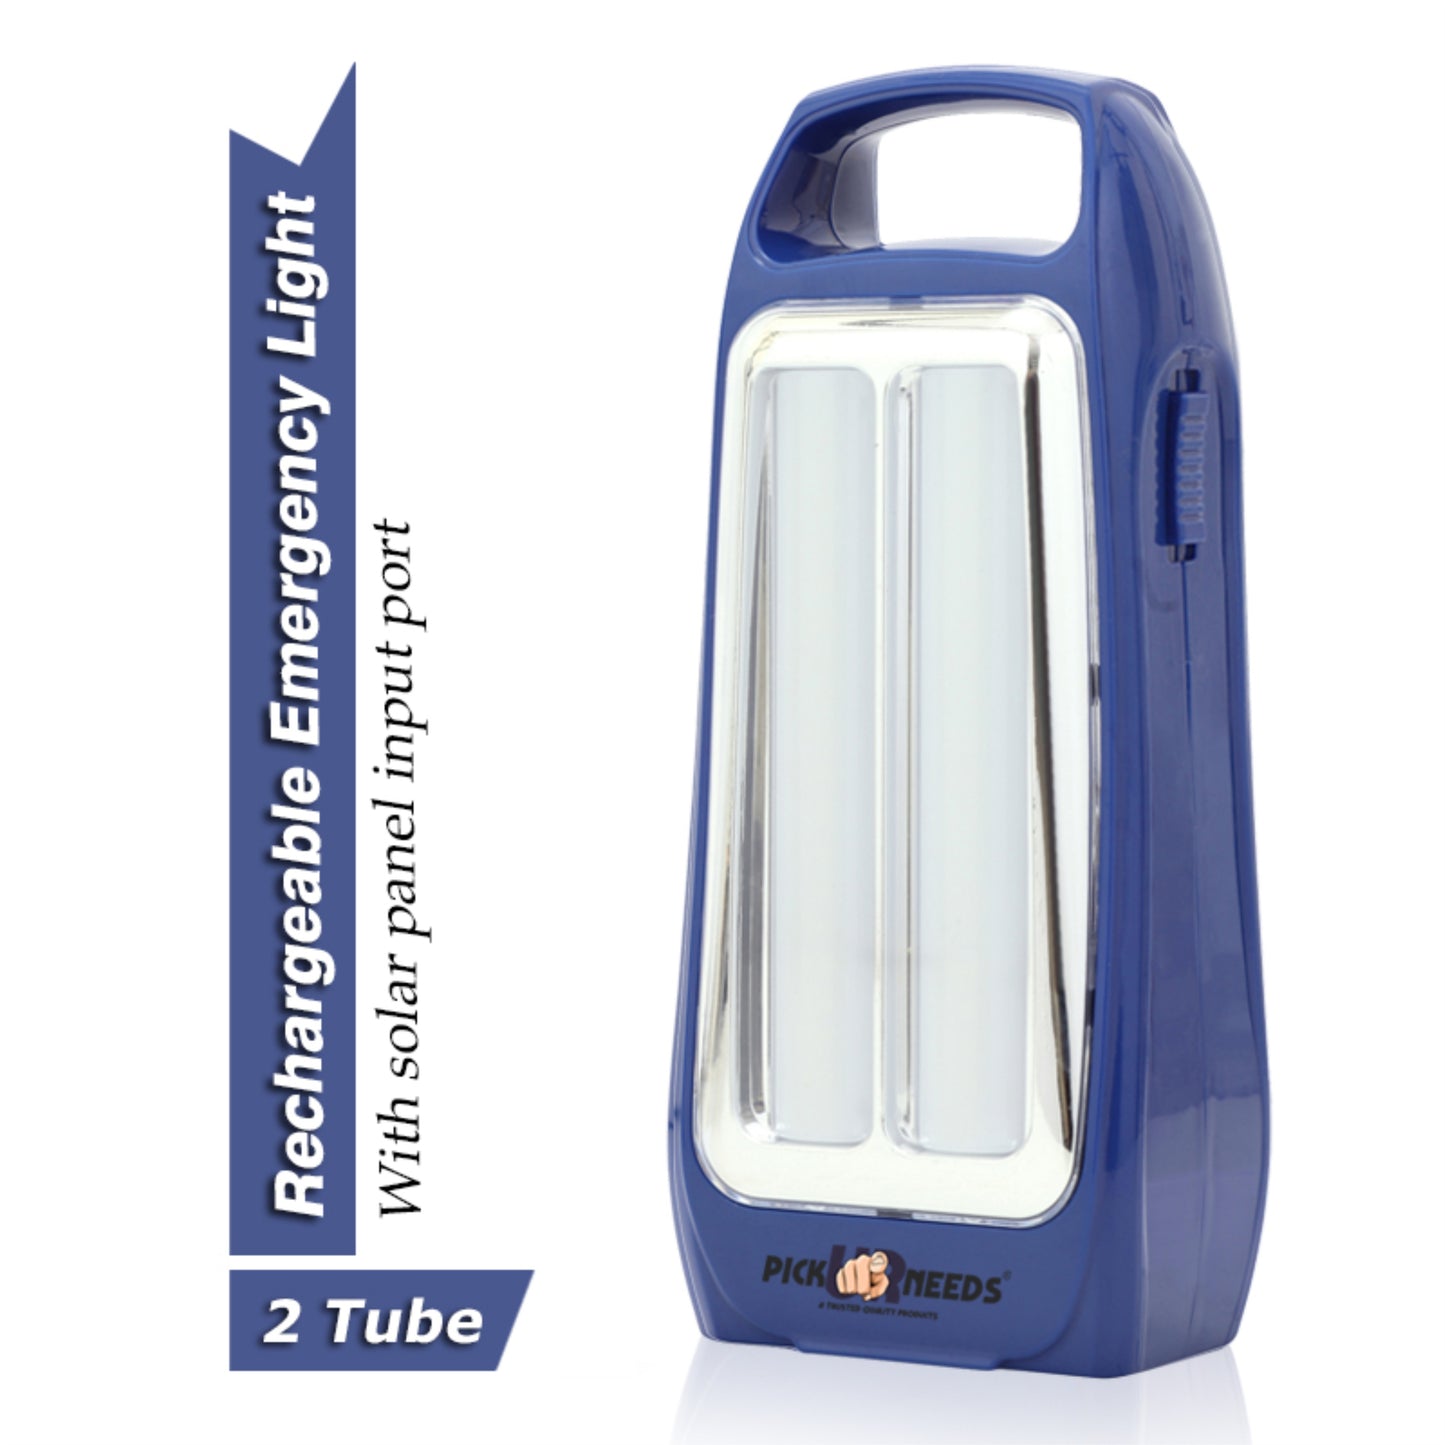 Pick Ur Needs Rechargeable & Portable Bright 2 Tube LED Lantern Lamp Home Emergency Light